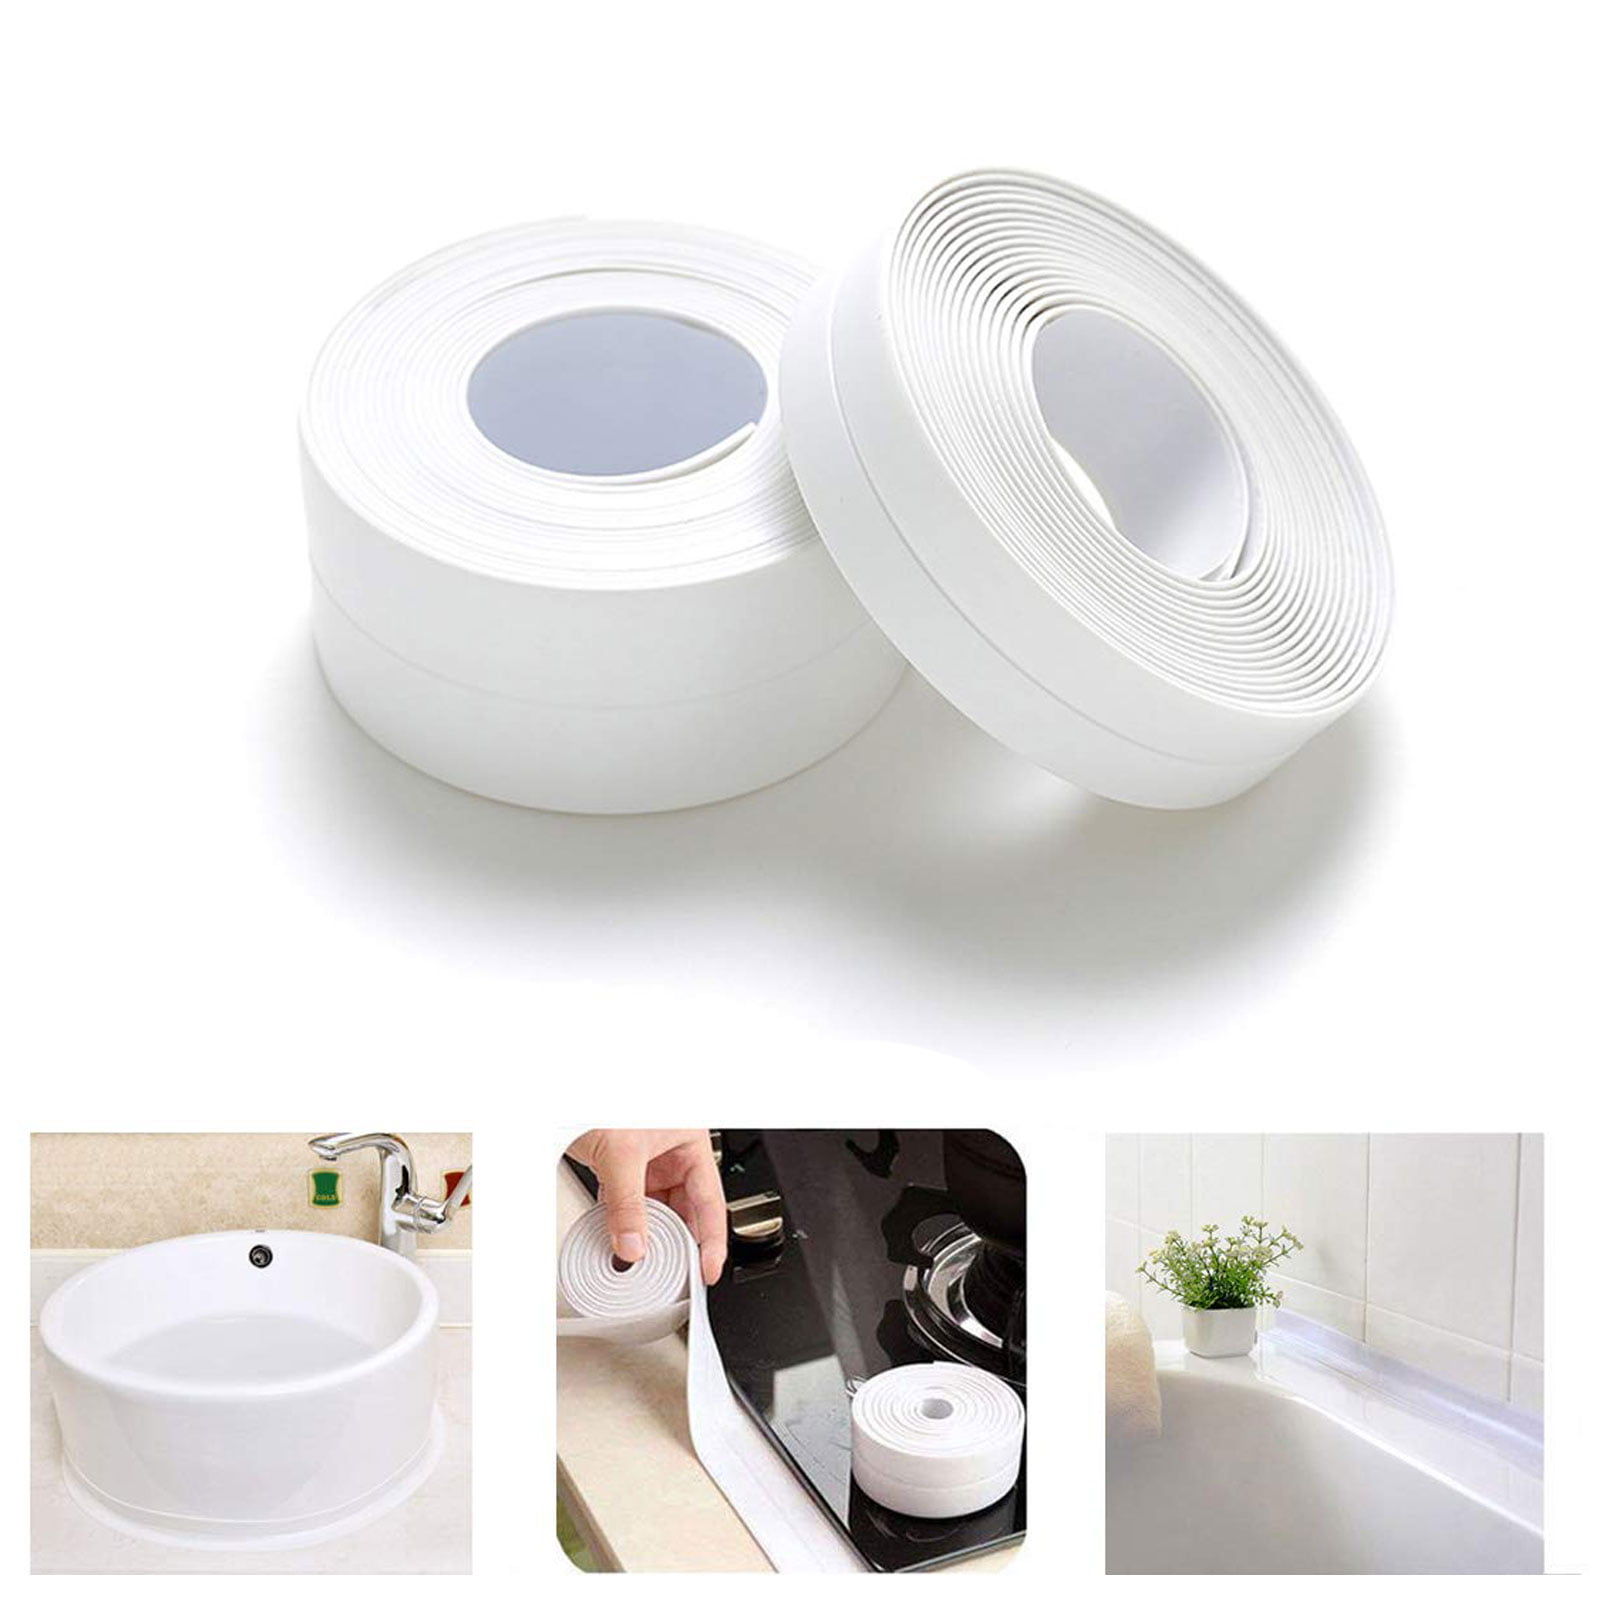 3 Colors 3.2M Length Flexible Self Adhesive Bath Wall Sealing Strip Sink Basin Edge Trim Kitchen Caulking Tape #4 Sealing Strip 